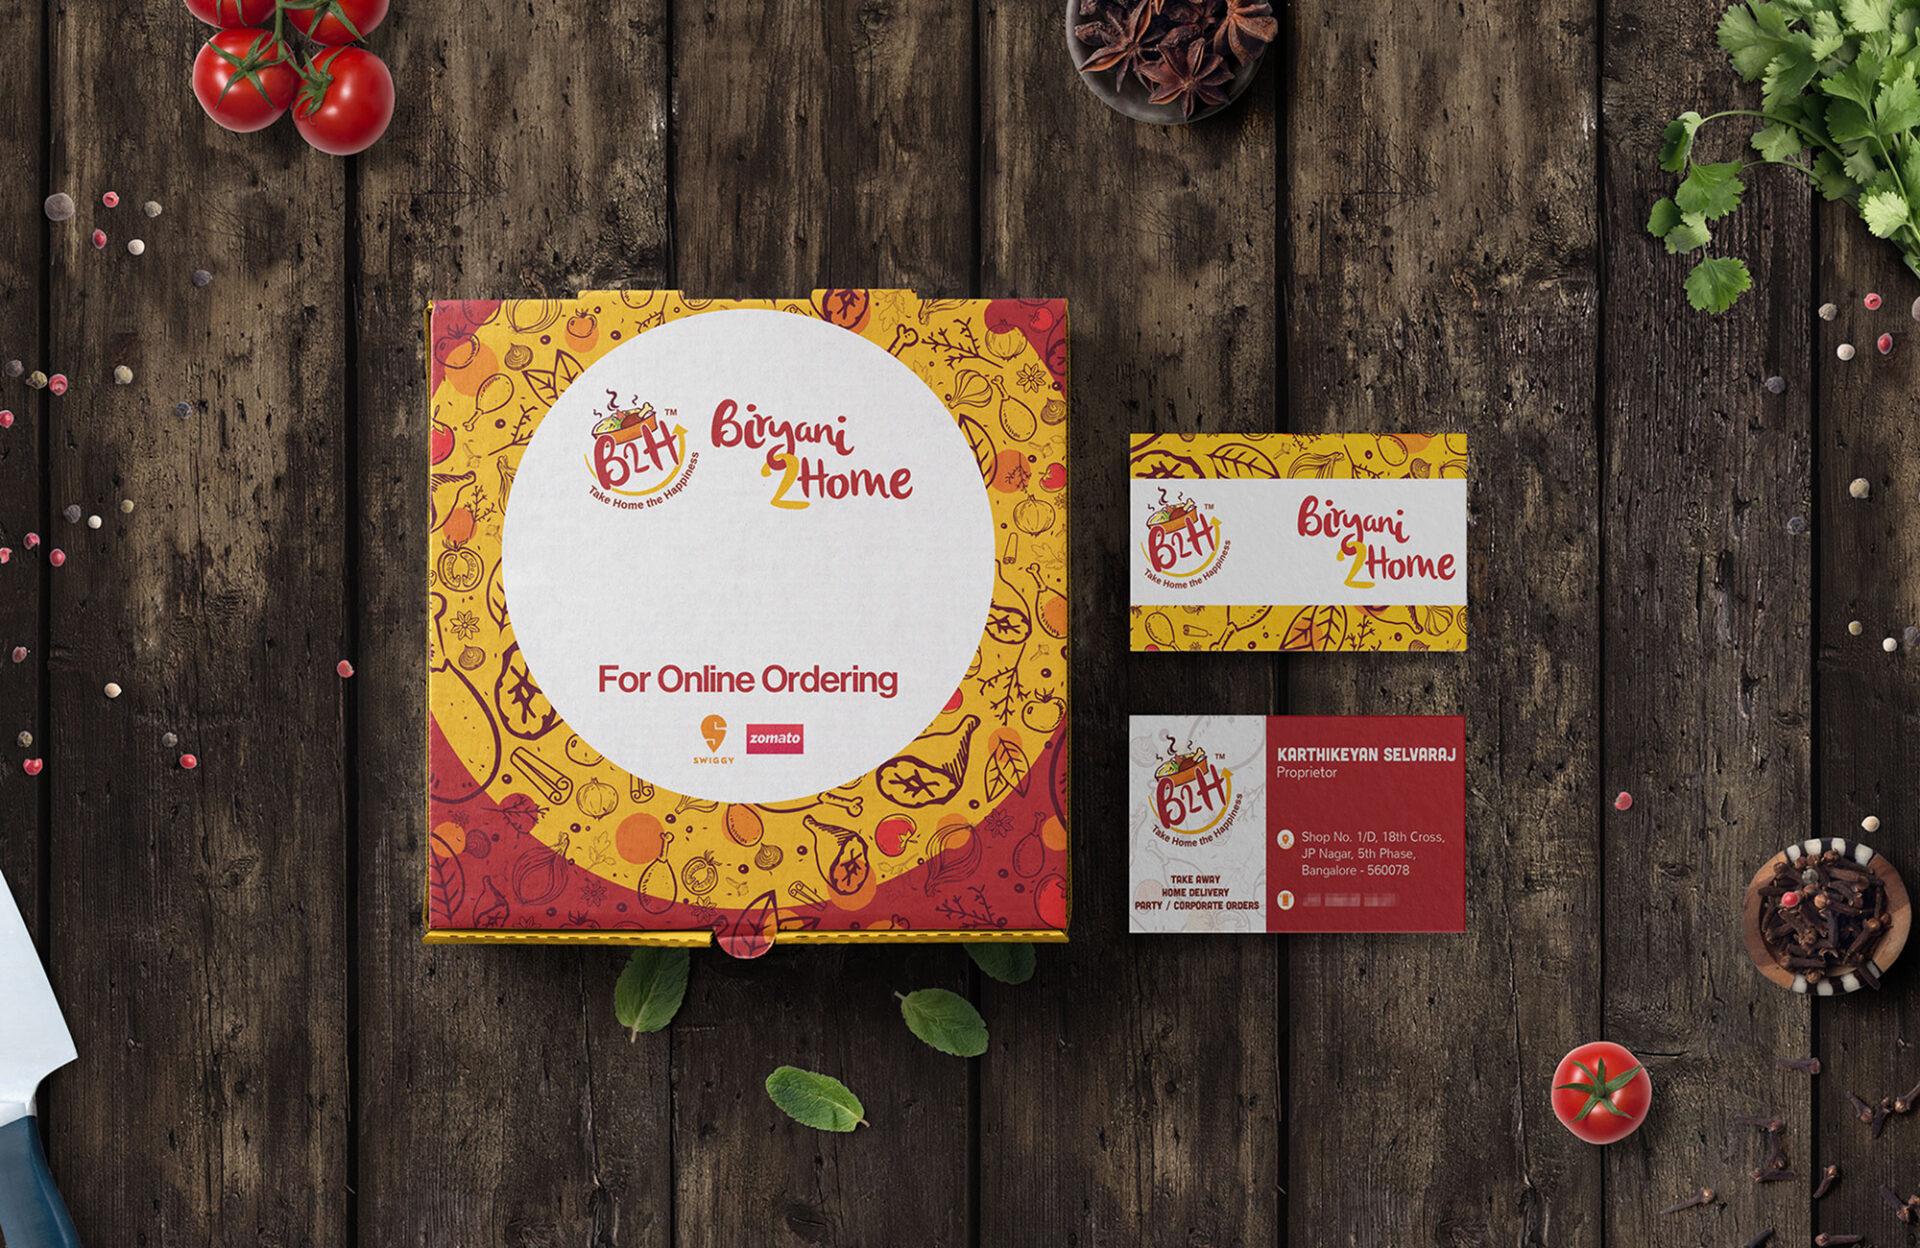 b2h-biriyani2home-restaurant-takeaway-biriyani-outlet-packaging-design-branding-strategy-brand-visual-identity-consulting-services-agency-reinaphics-creatives-chennai-india